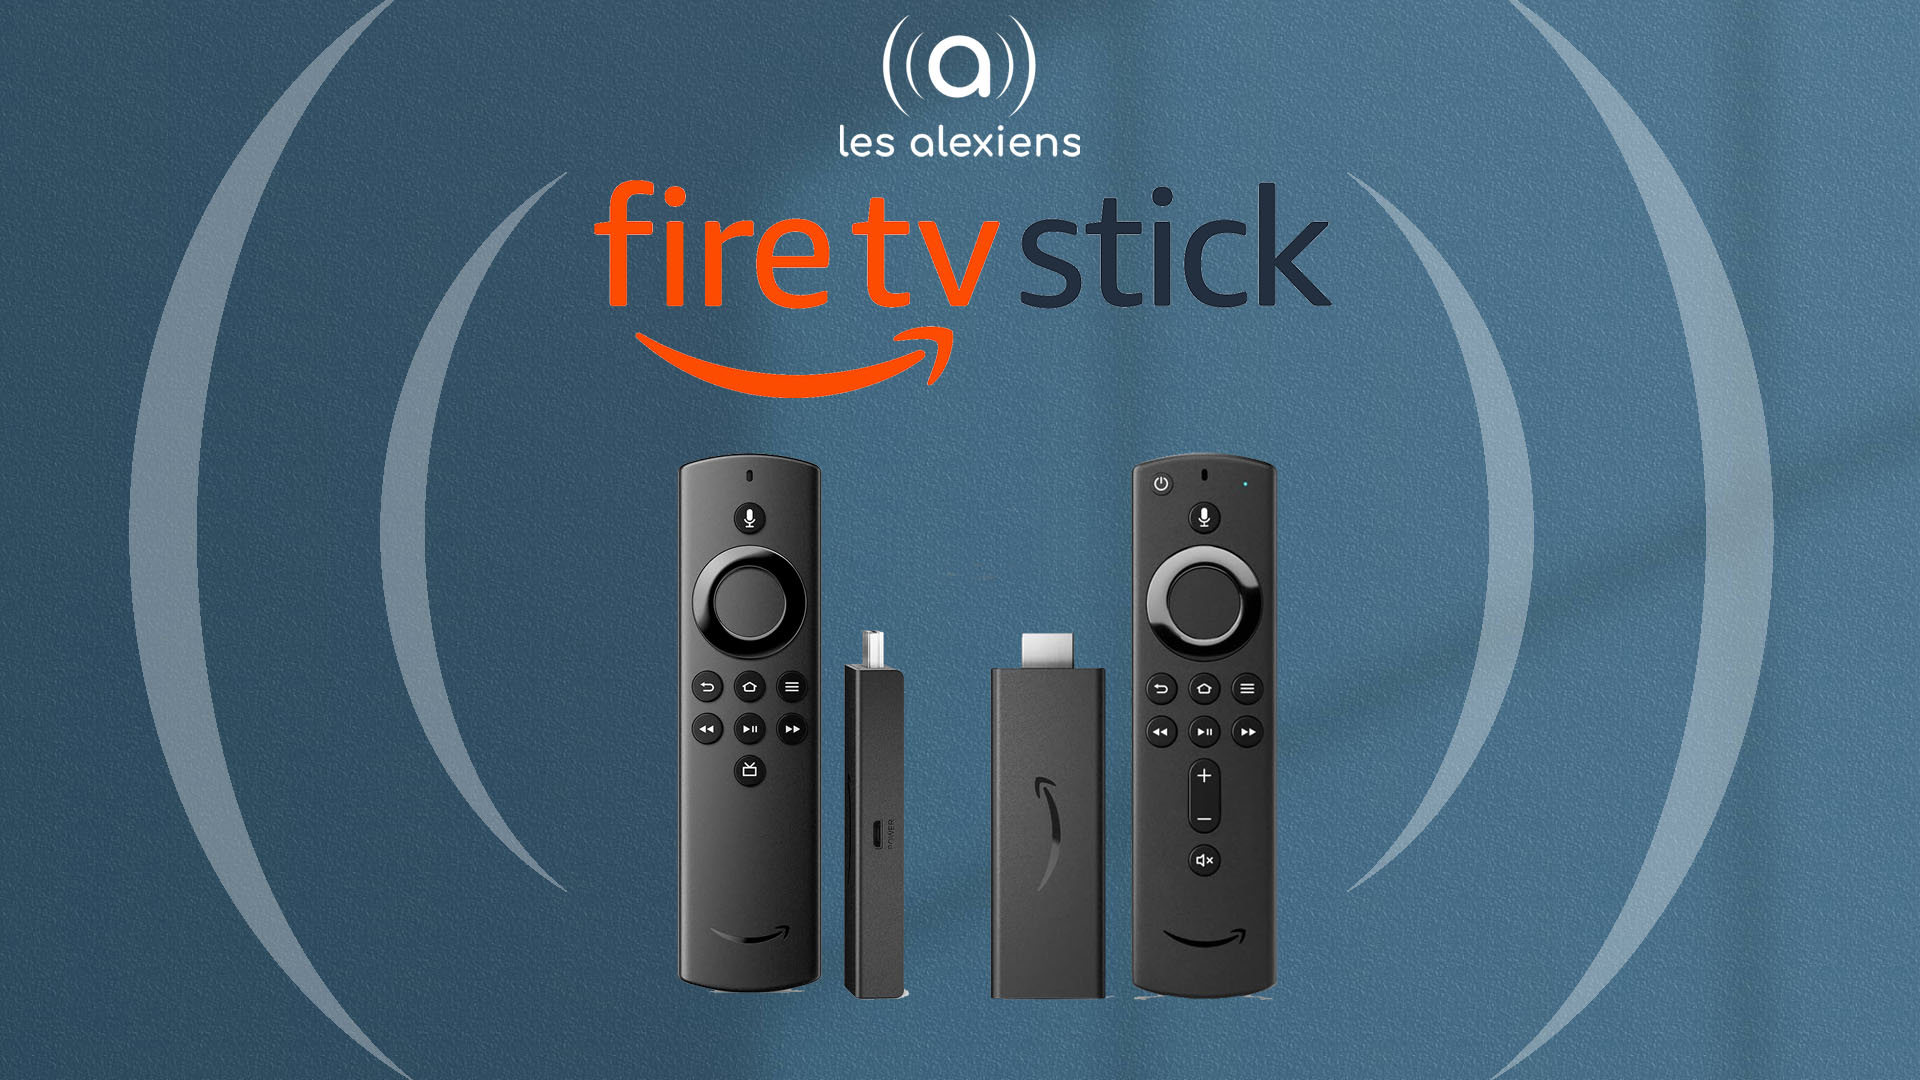 Clé de diffusion  Fire TV Lite avec commandes vocales Alexa